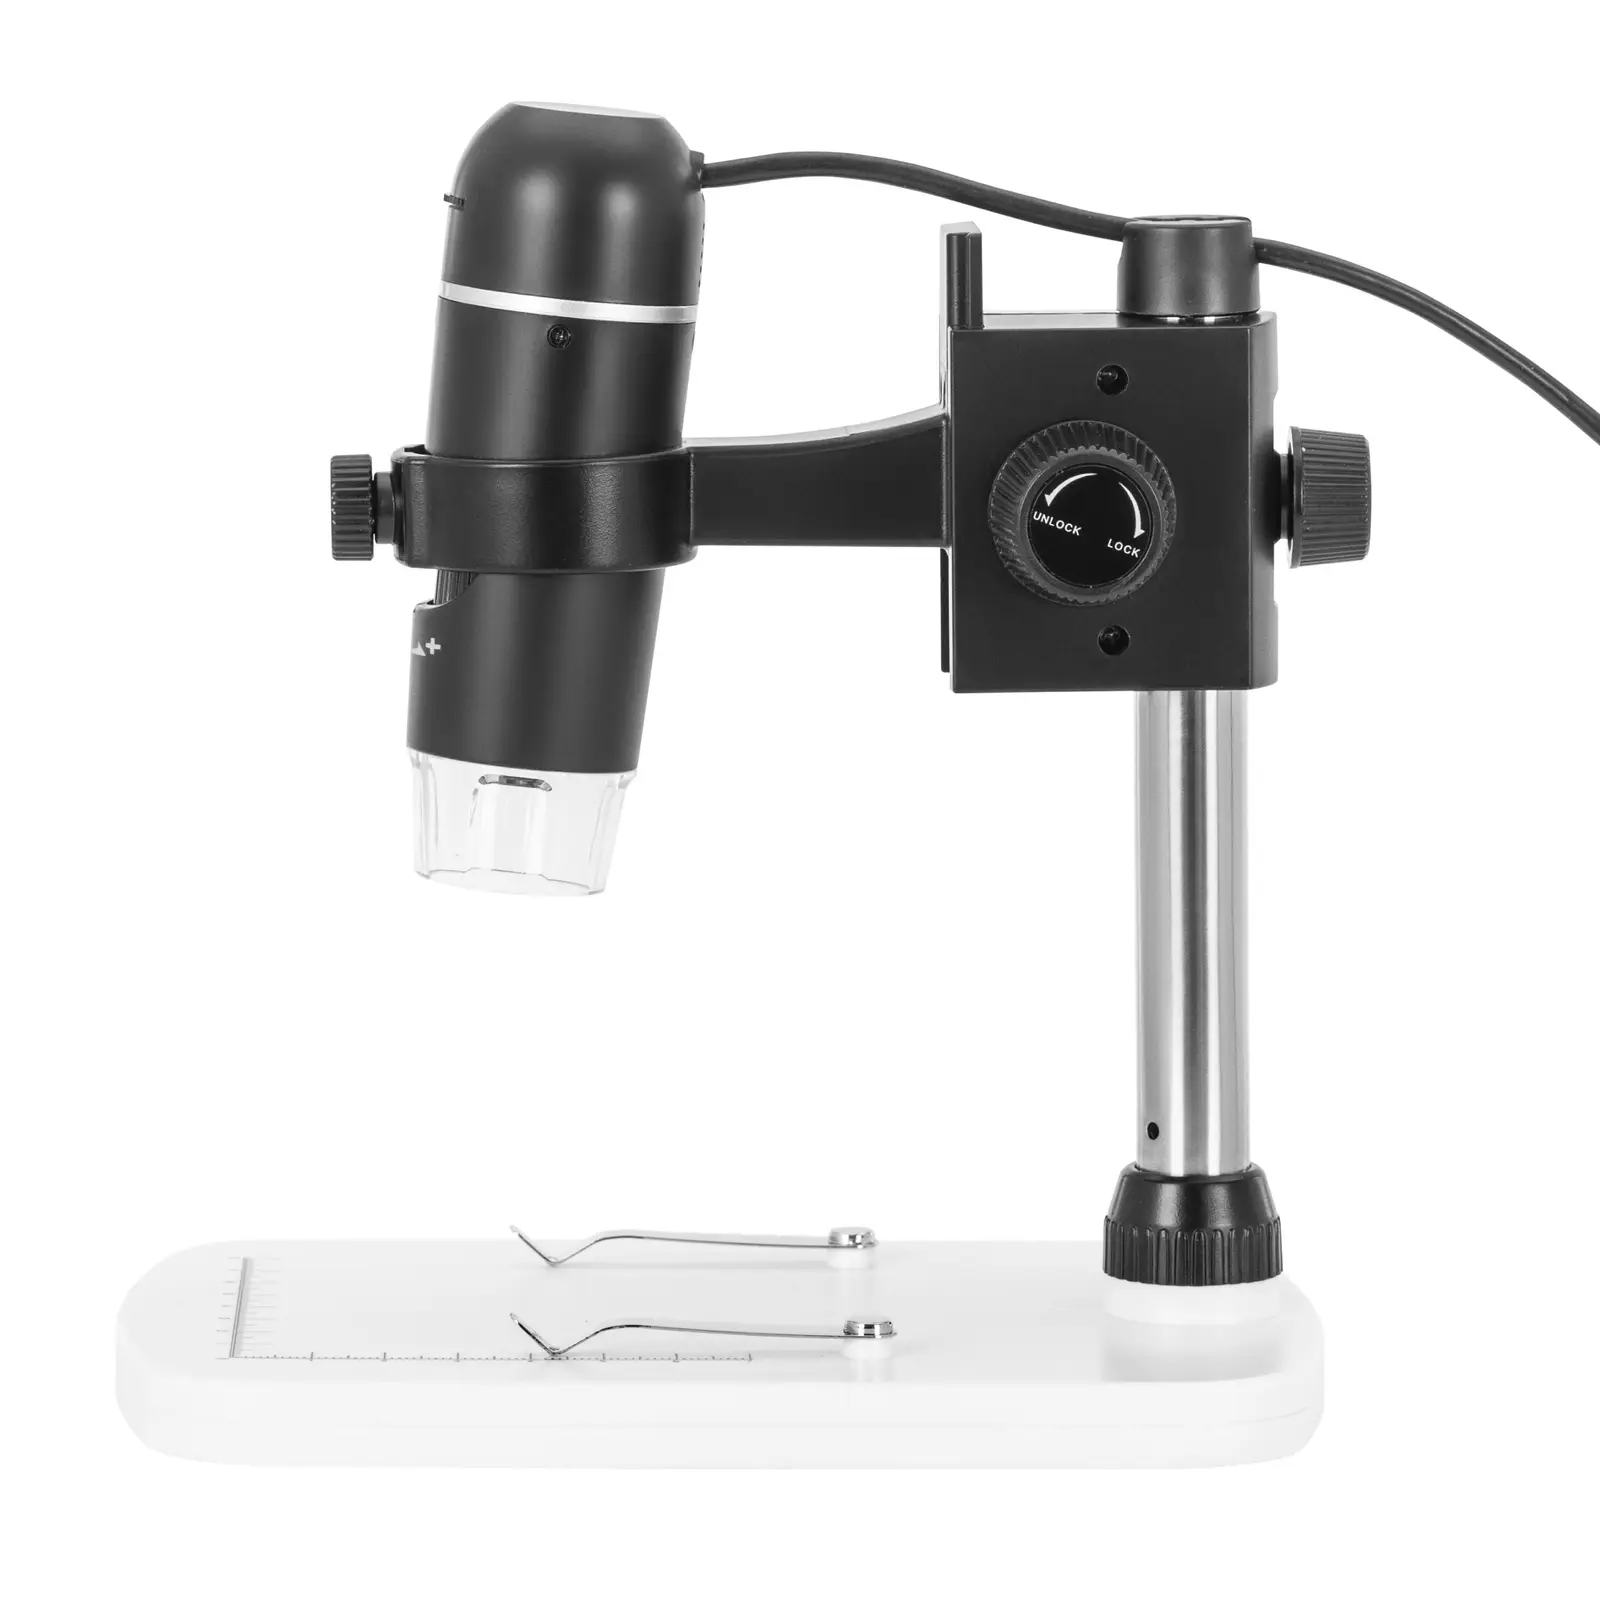 Microscopio digital - 10 - 300x - luz incidente LED - USB